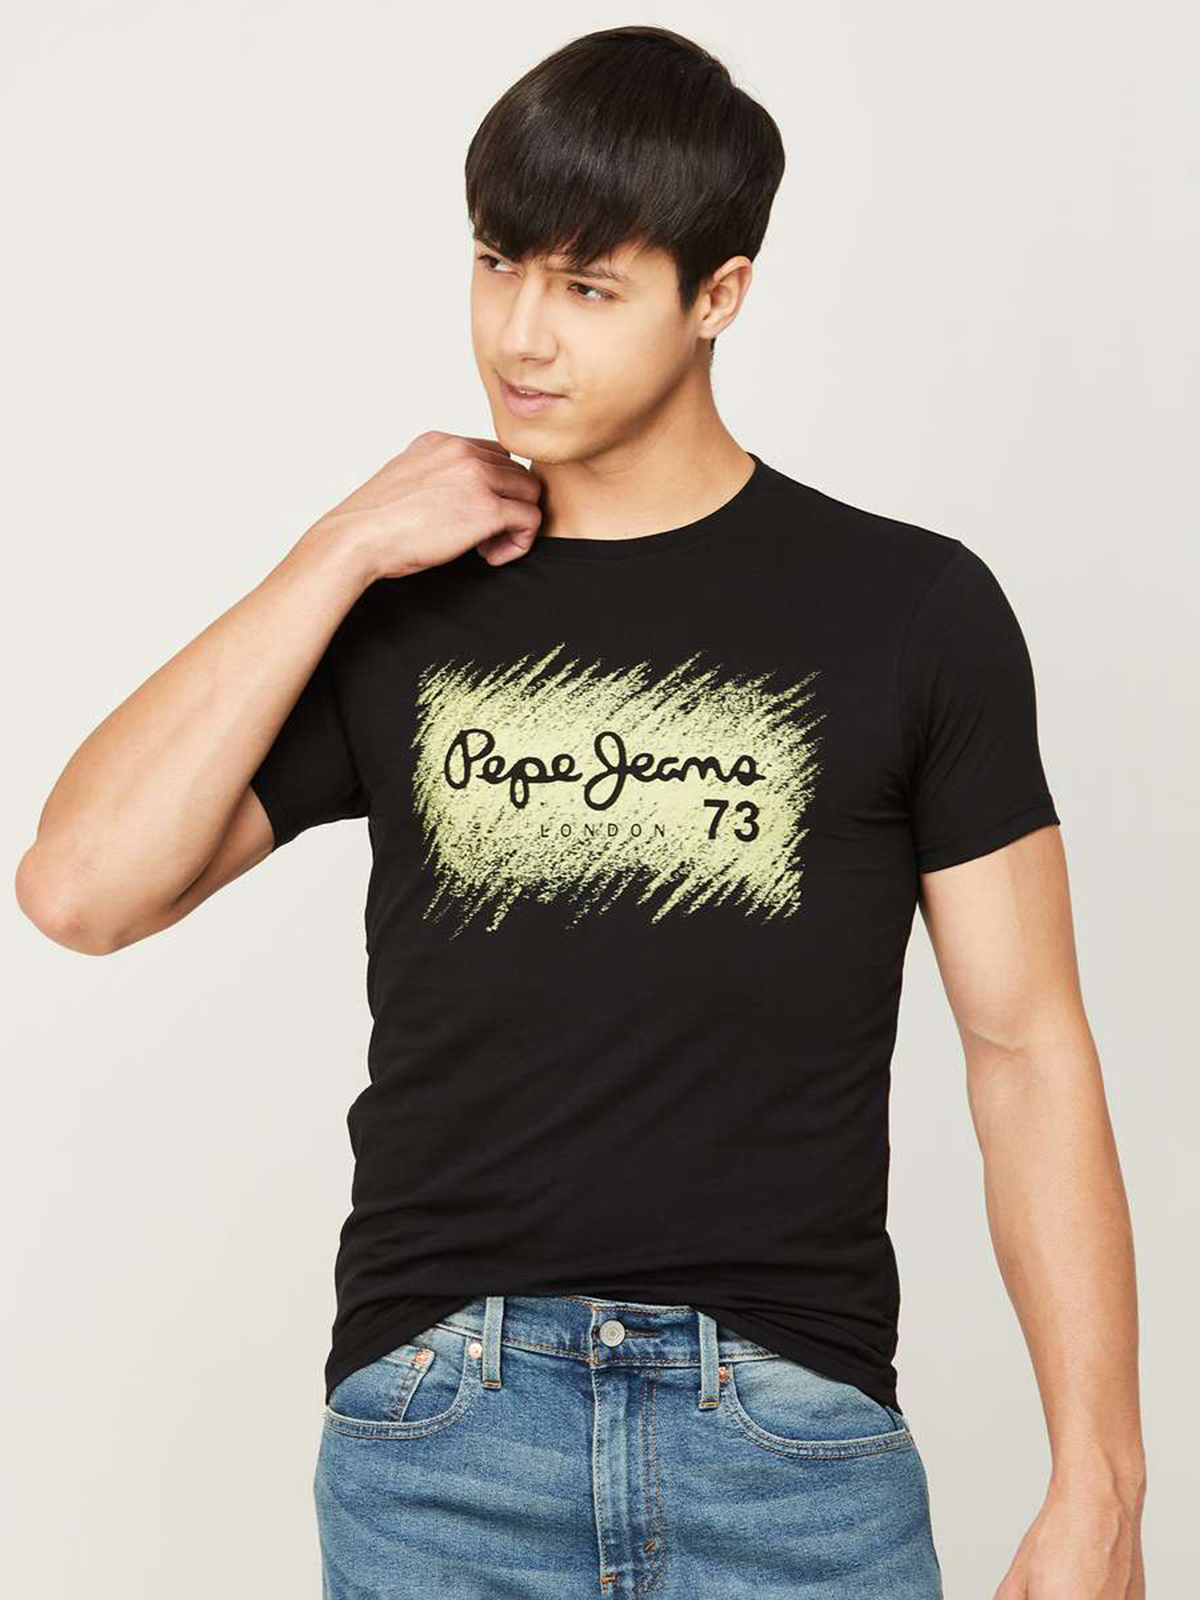 Pepe Jeans black printed t shirt - G3-MTS15414